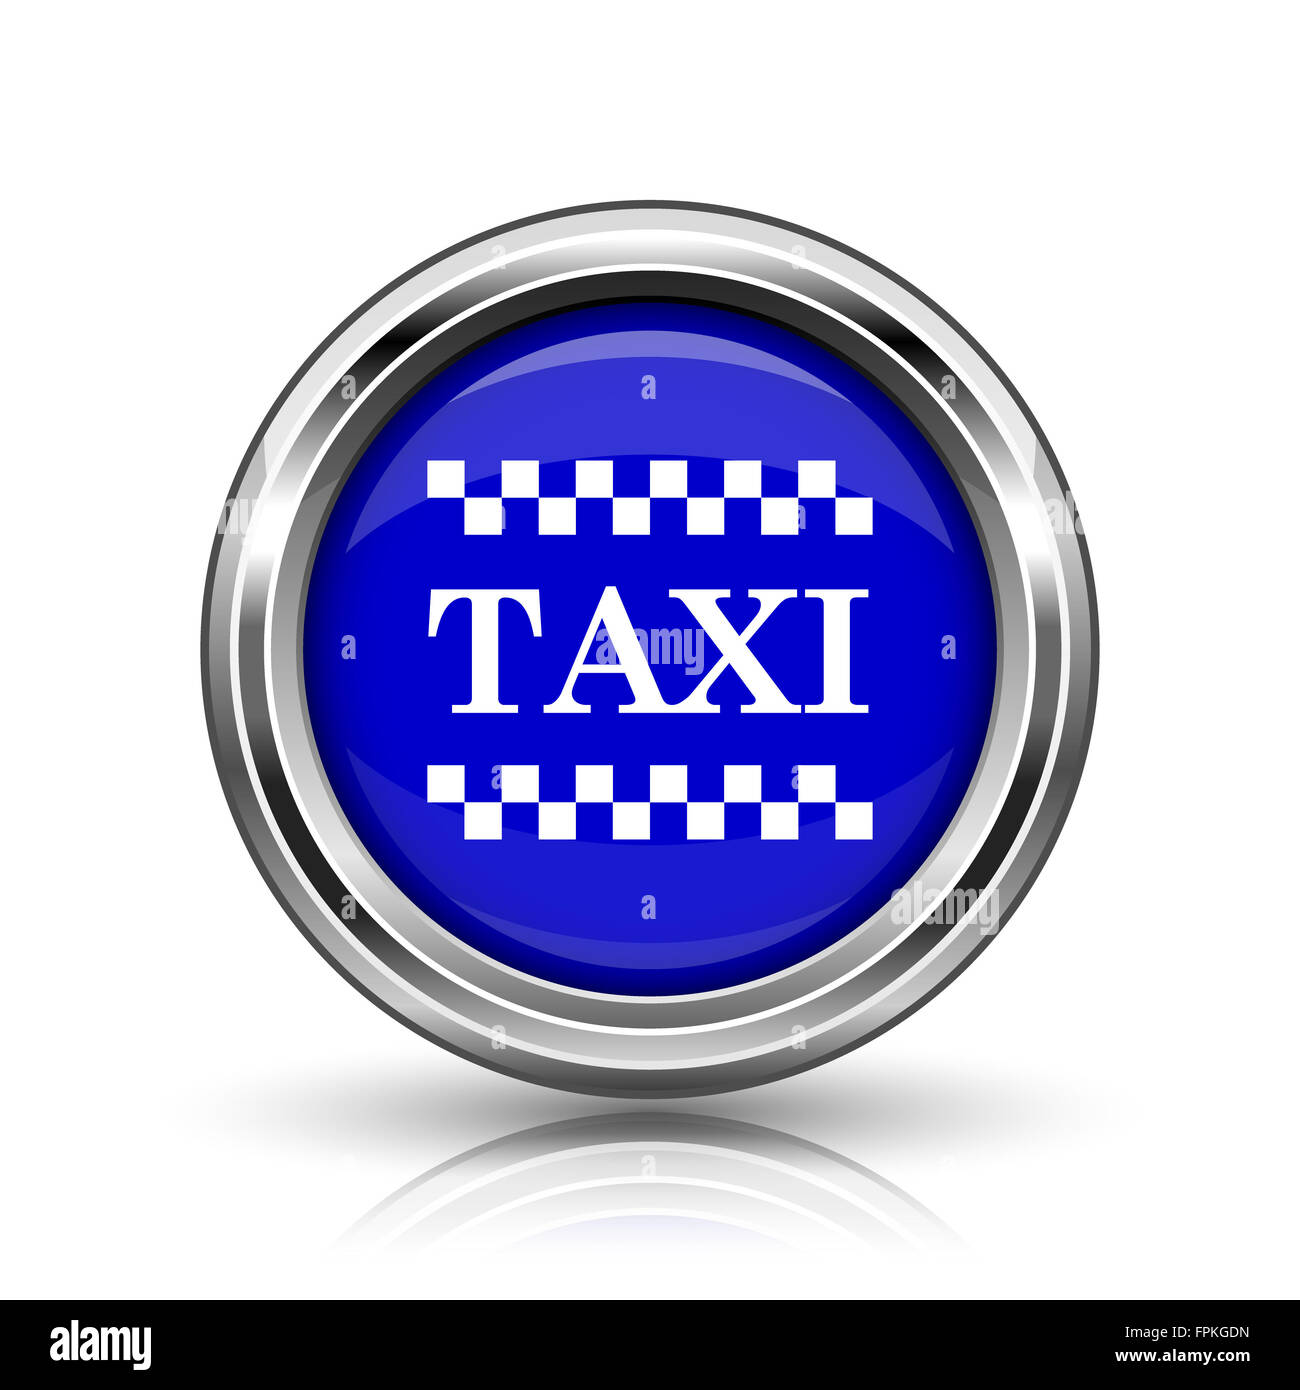 Taxi icon. Shiny glossy internet button on white background. Stock Photo